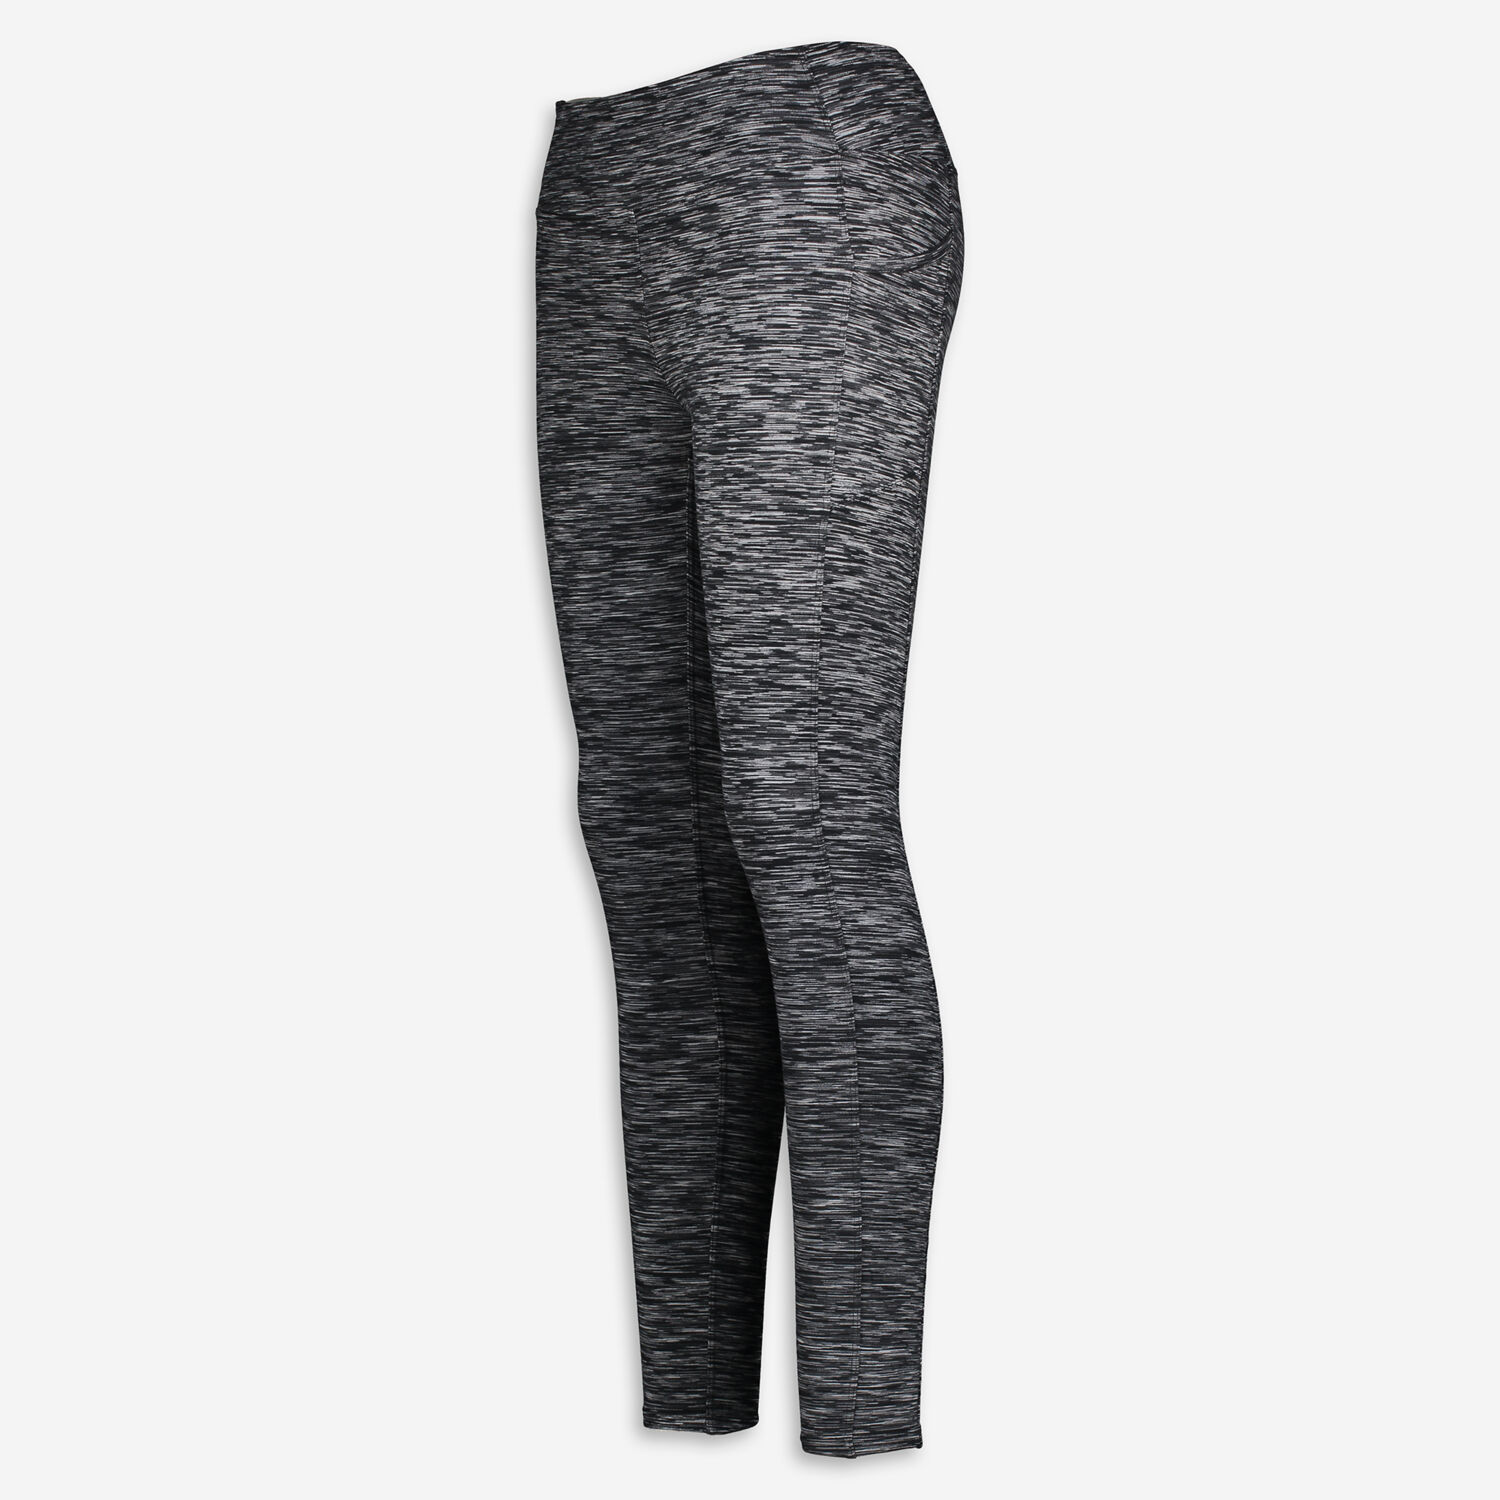 Kyodan Women's Leggings Xs Grey Polyester with Spandex